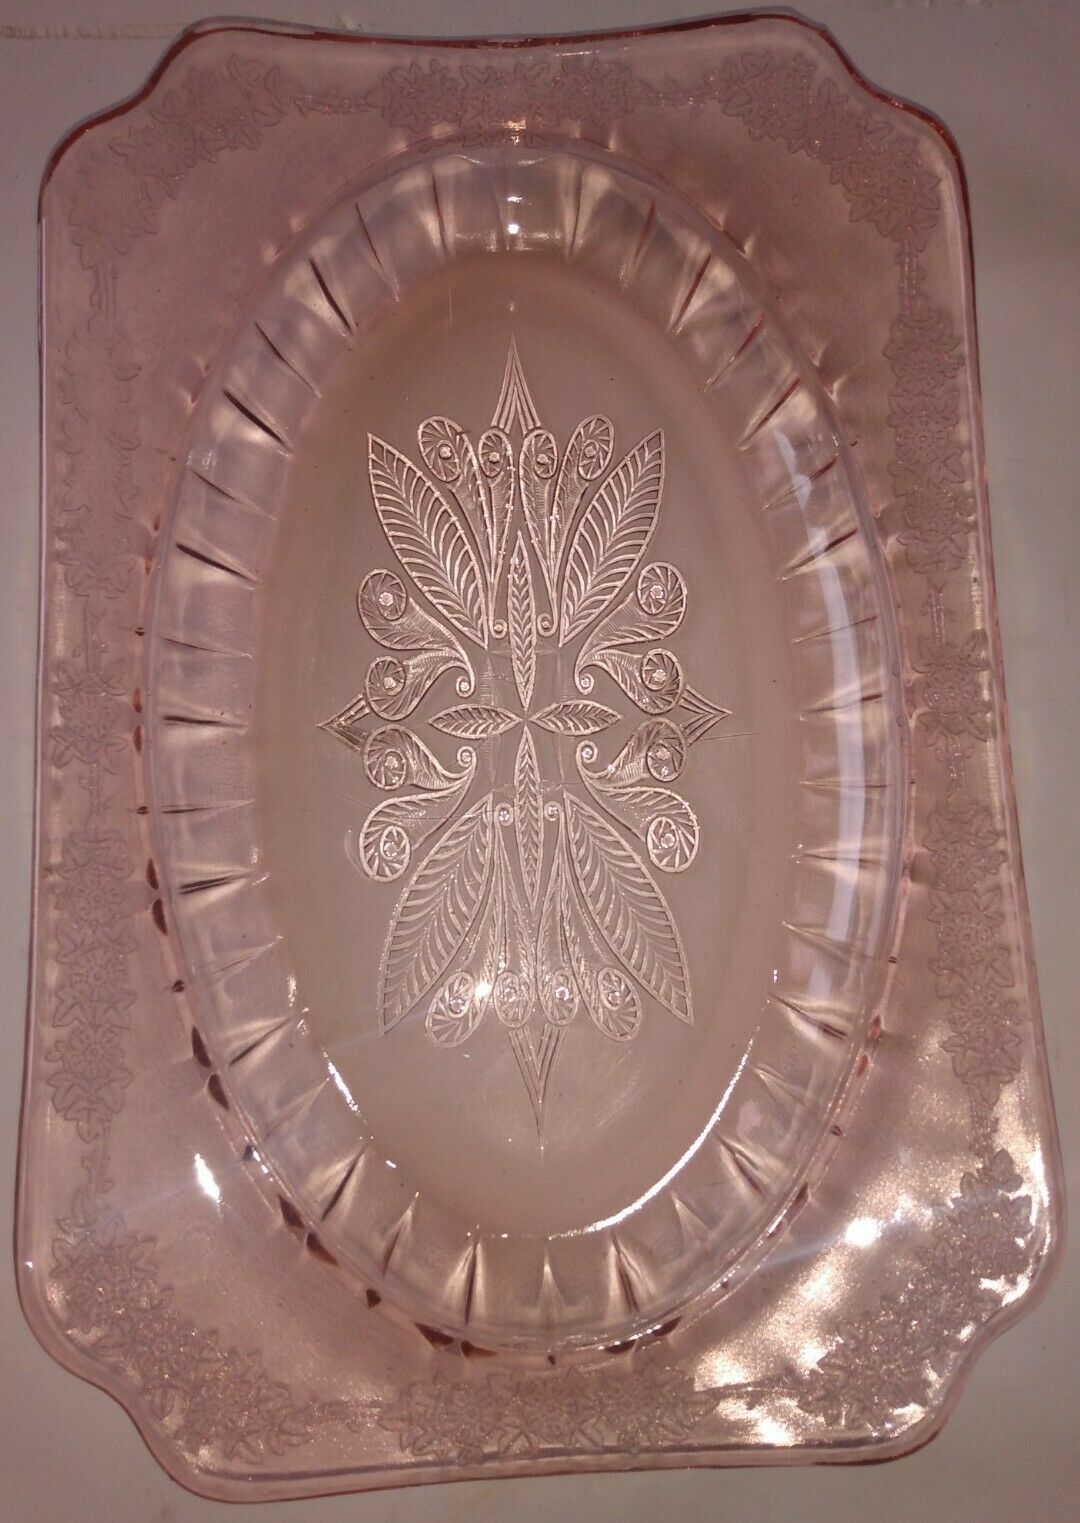 Vintage Jeanette Pink Depression Glass 11.75" X 7.75" X1" Platter "adam" 1932-34